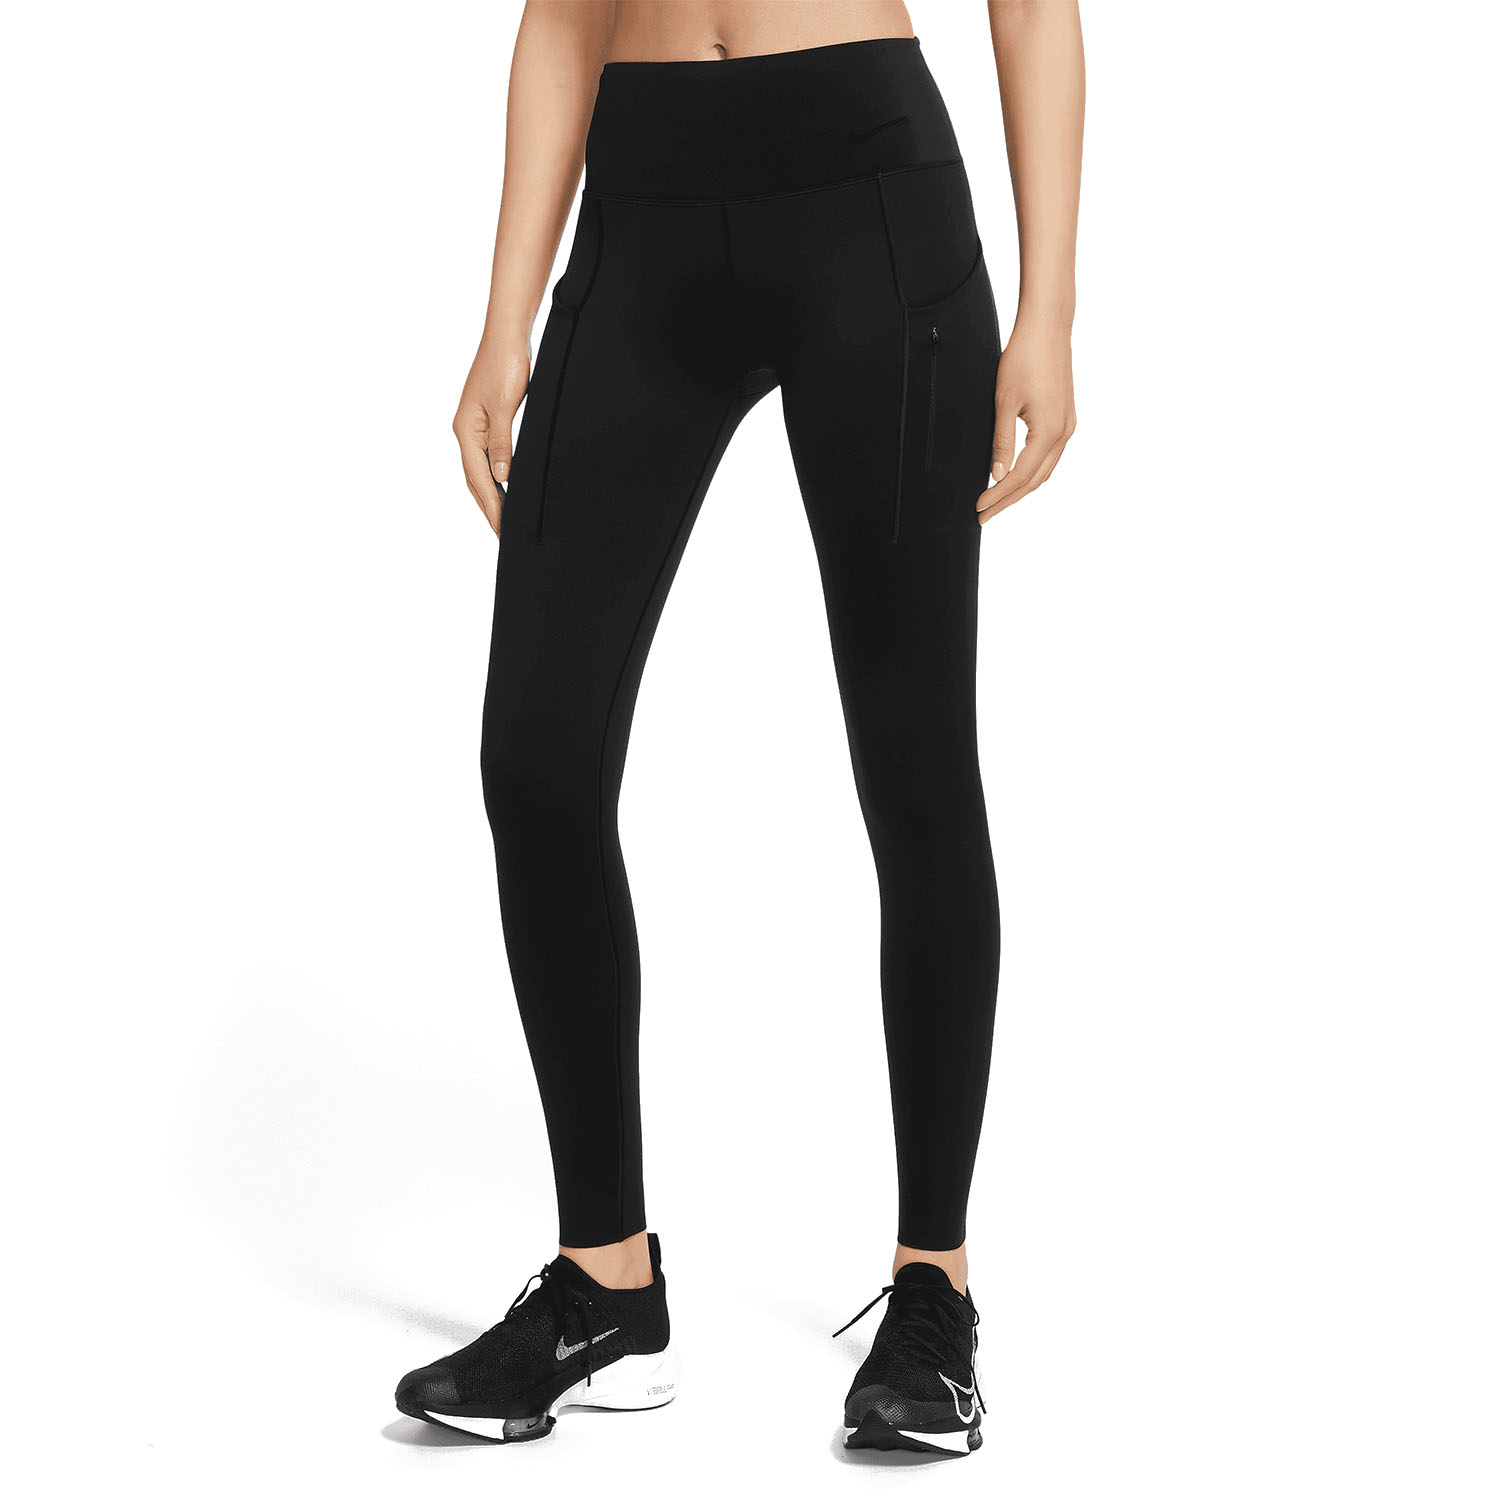 Nike Go Swoosh Women's Running Tights - Black